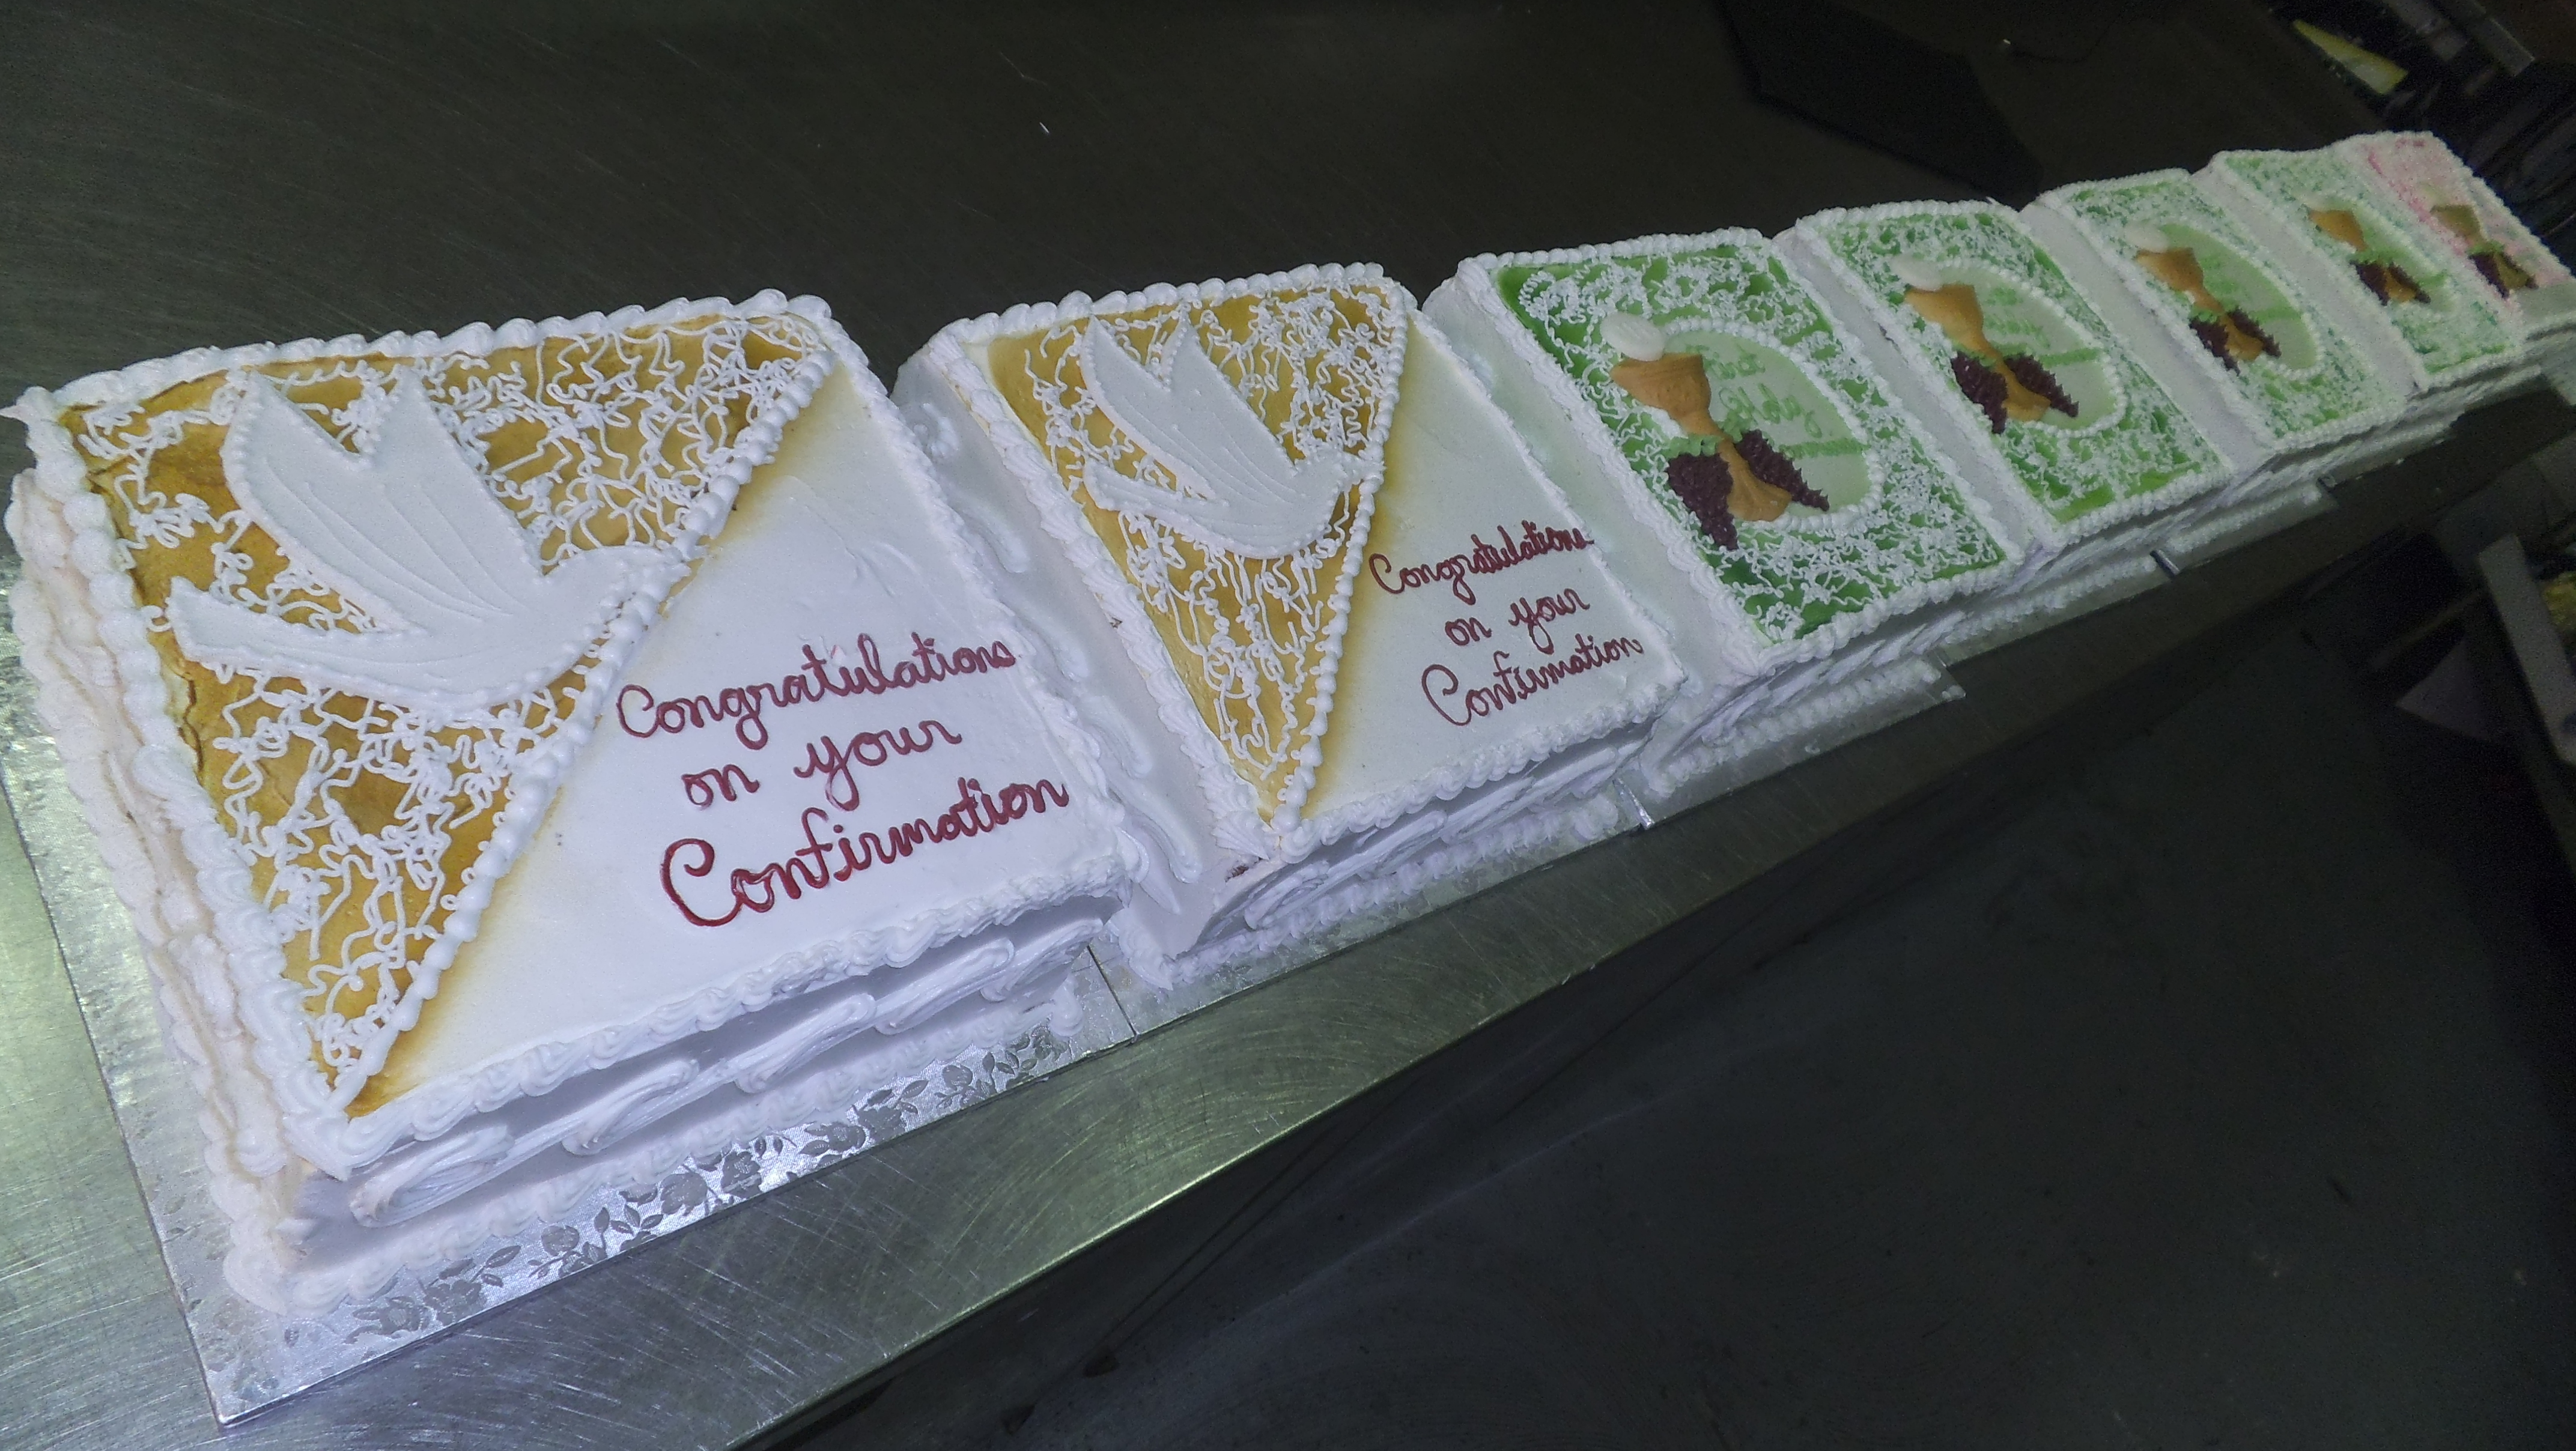 Dove Slab Cake Communion, Confirmation, And Baptism Religious Cake